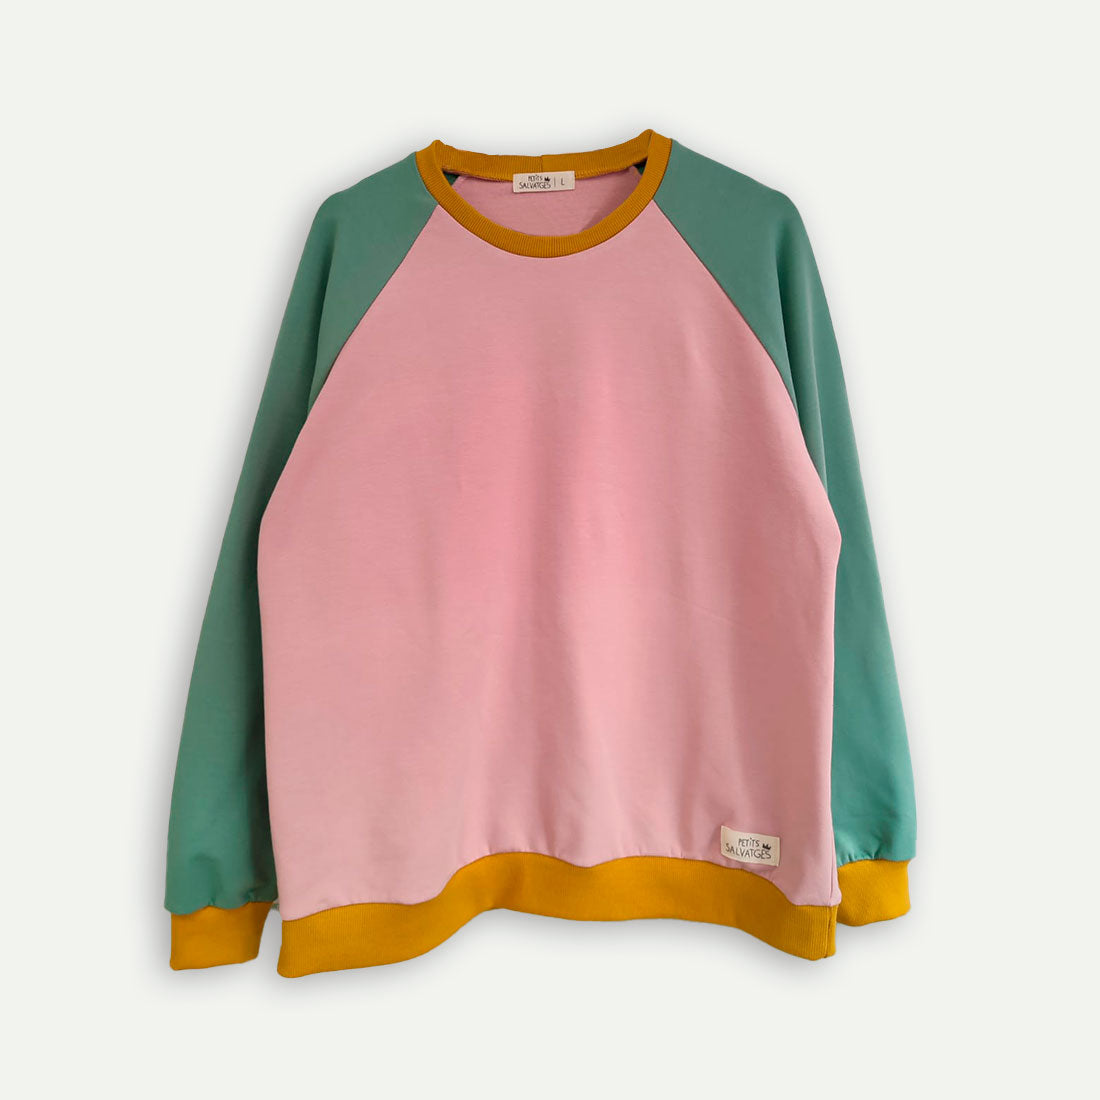 Tricolor sweatshirt (bubble gum pink, turquoise, mustard)